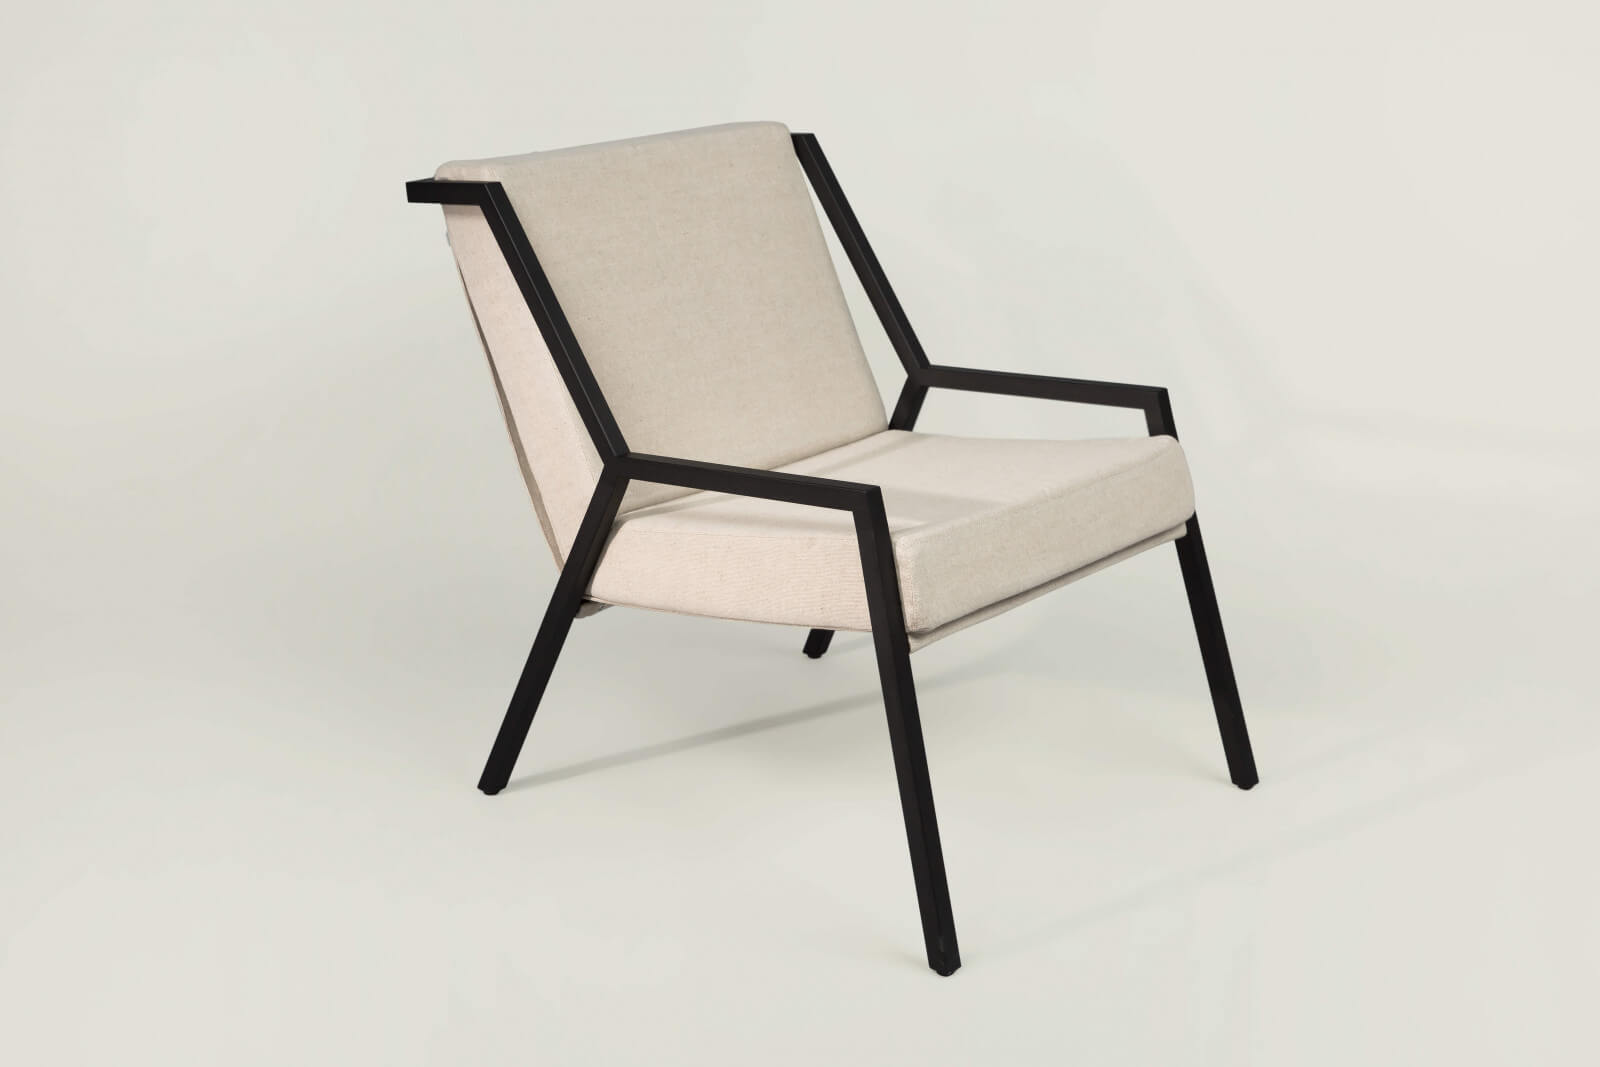 Lukas Bazle - chair design